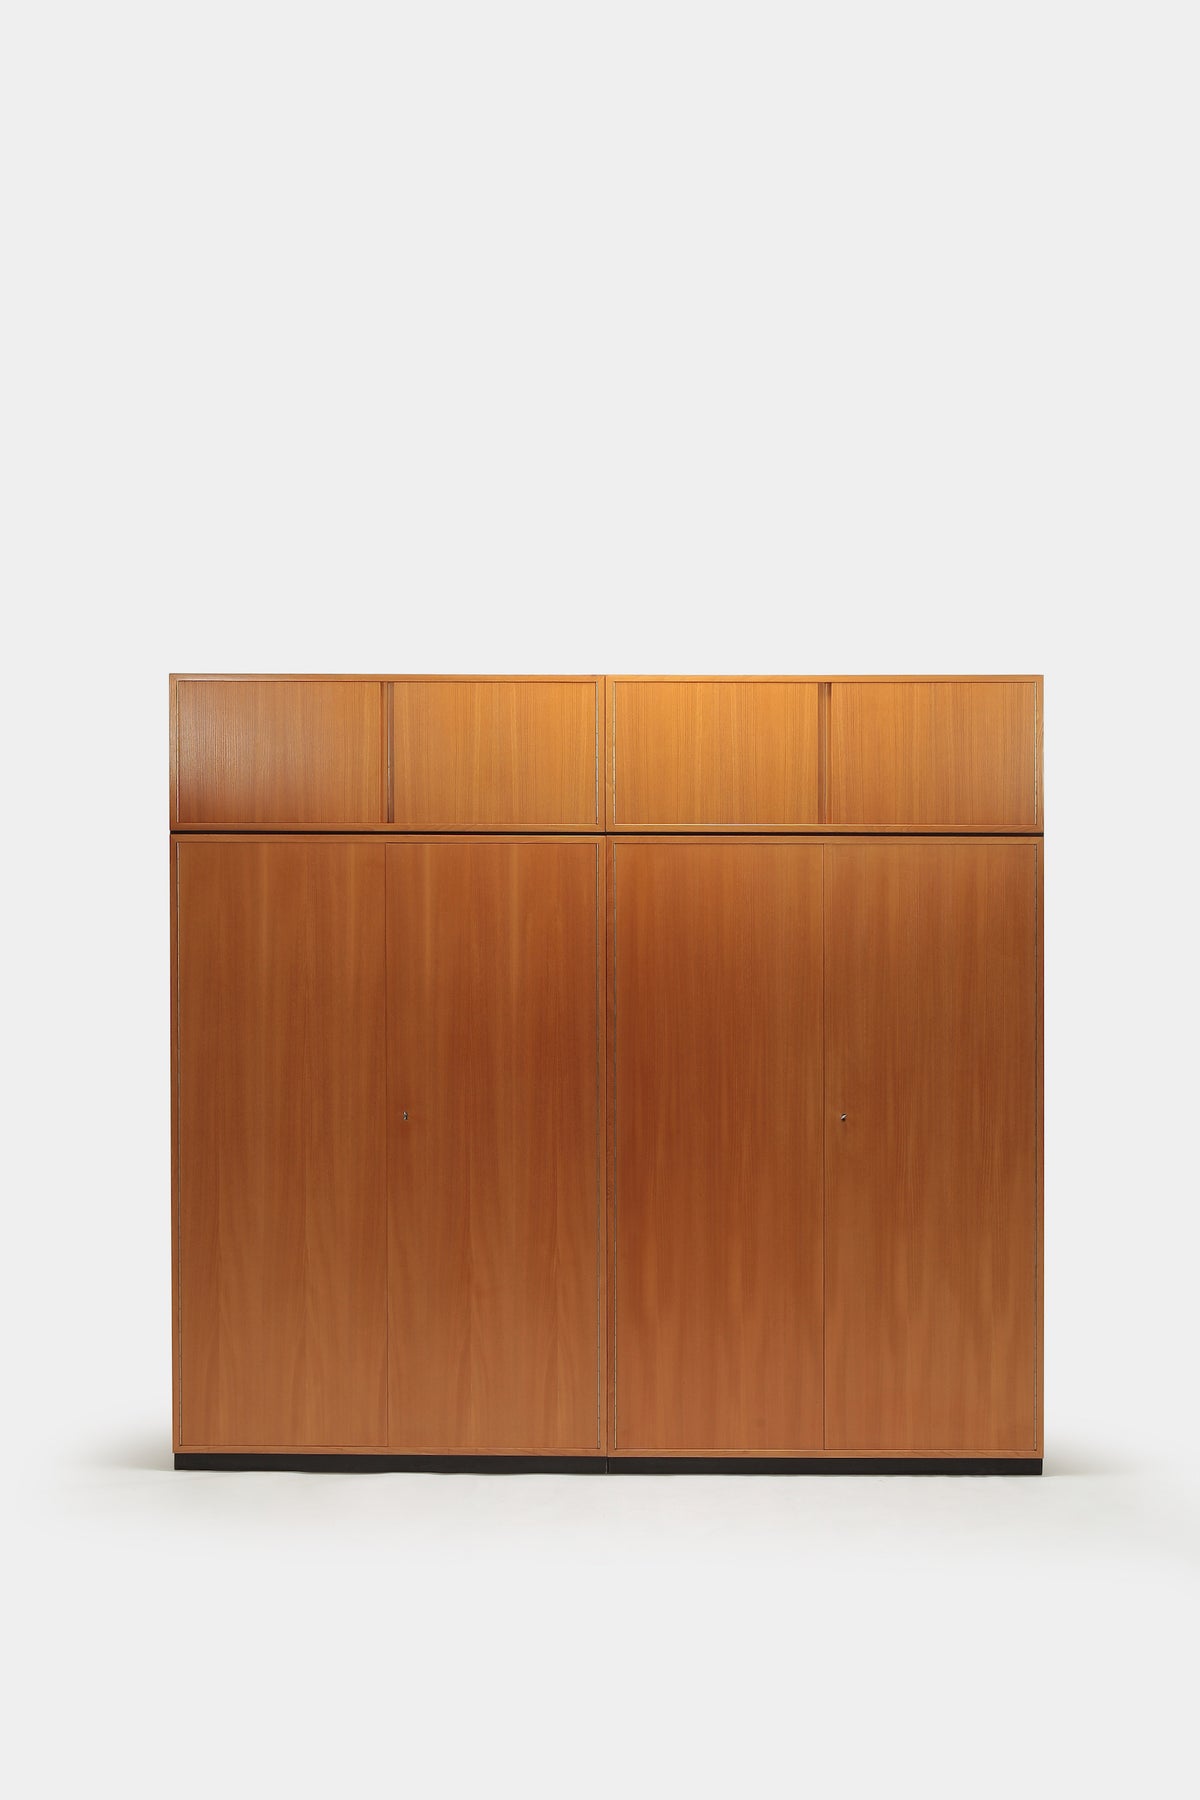 2 Zingg Lamprecht cabinets, Thomas Wolfer, 60s, elm wood